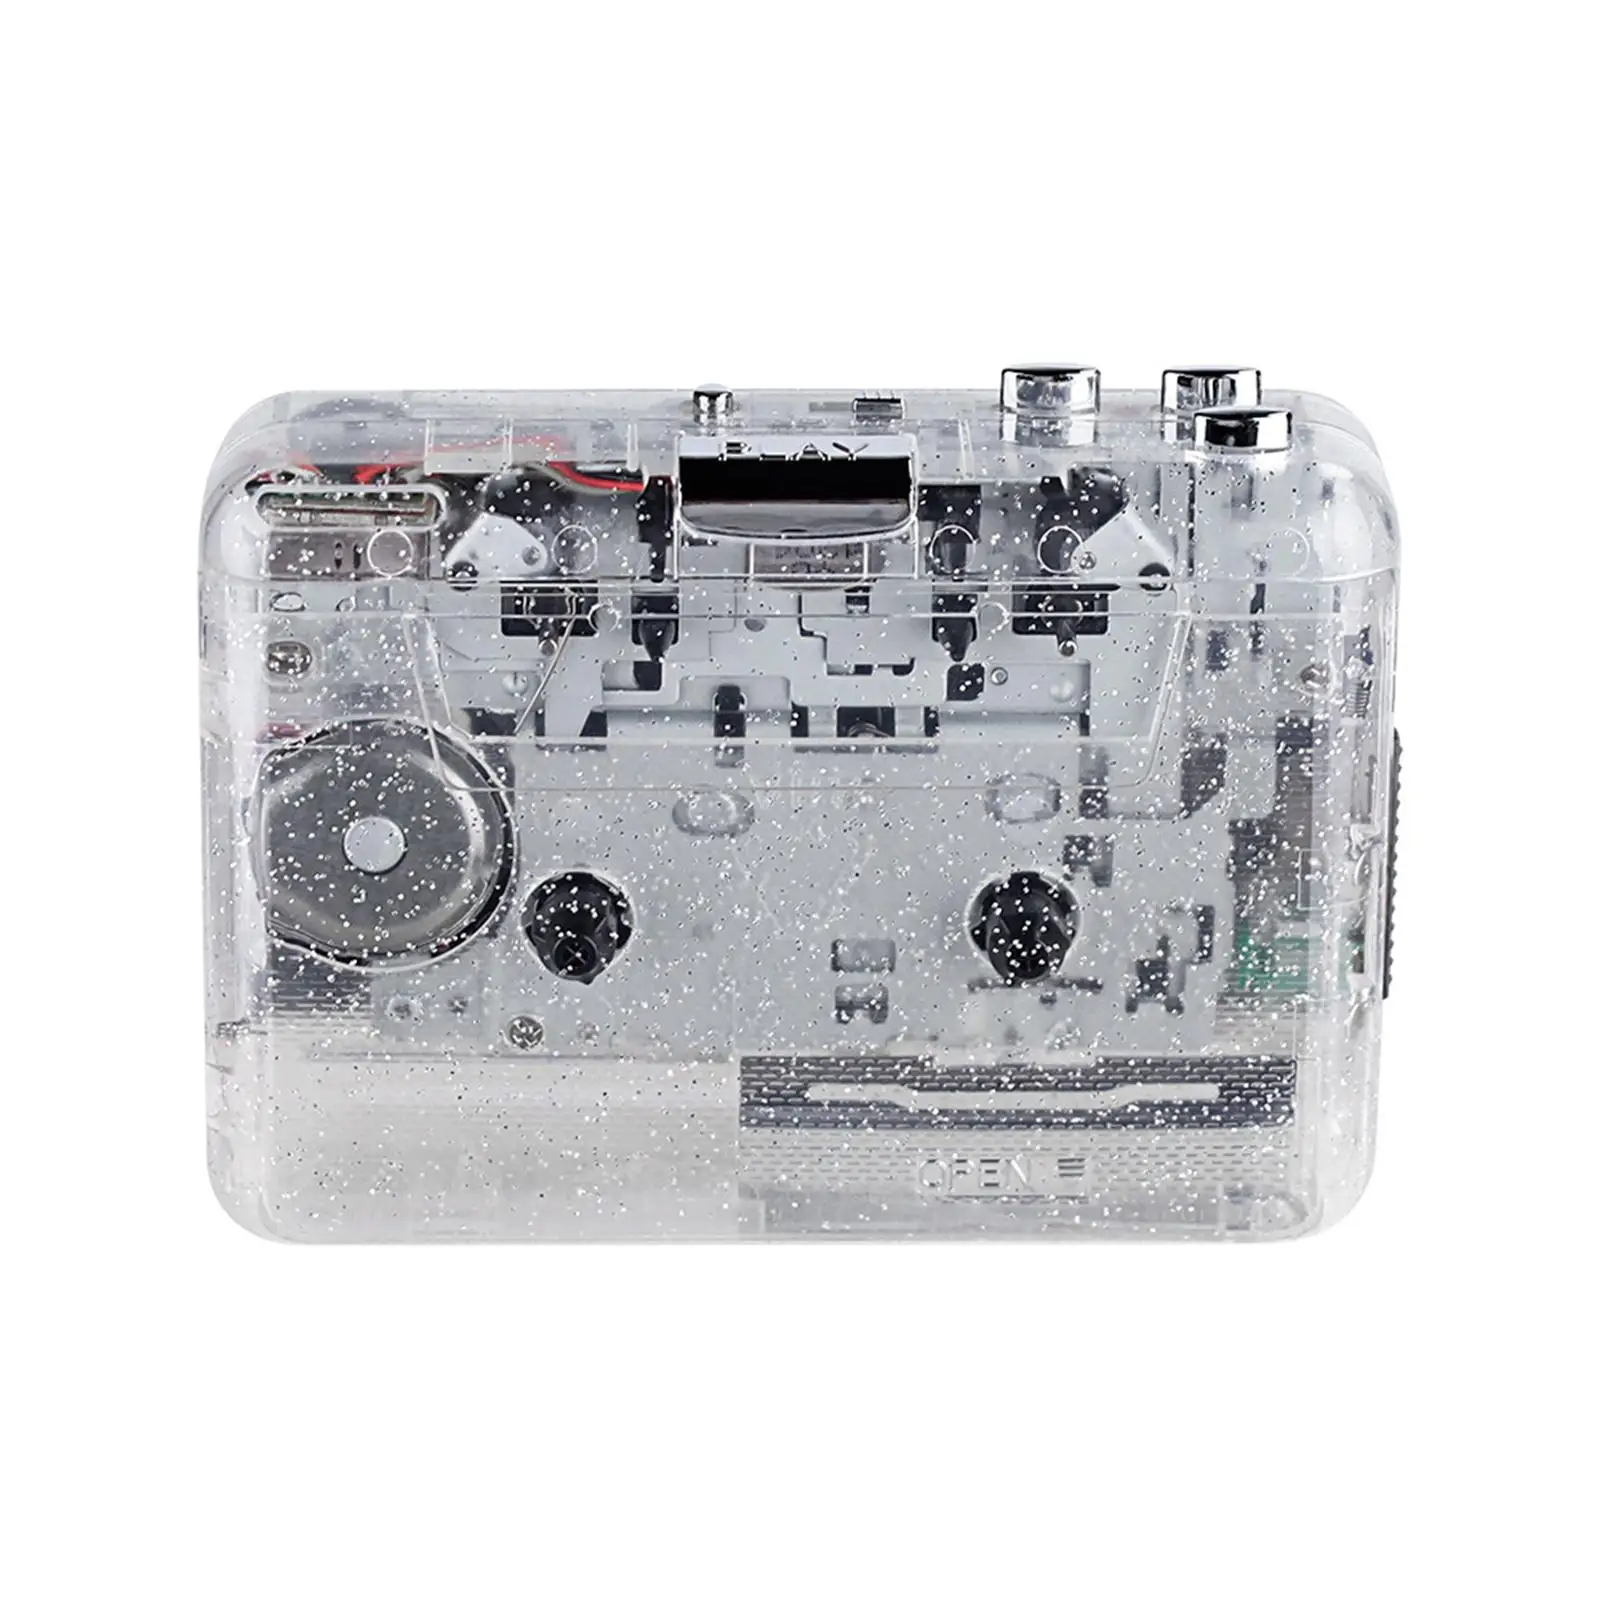 Cassette Player Lightweight Design 11x8.1x3.1cm Cassette to MP3 Converter Compact Recorder Compact Vintage Cassette Tape Player